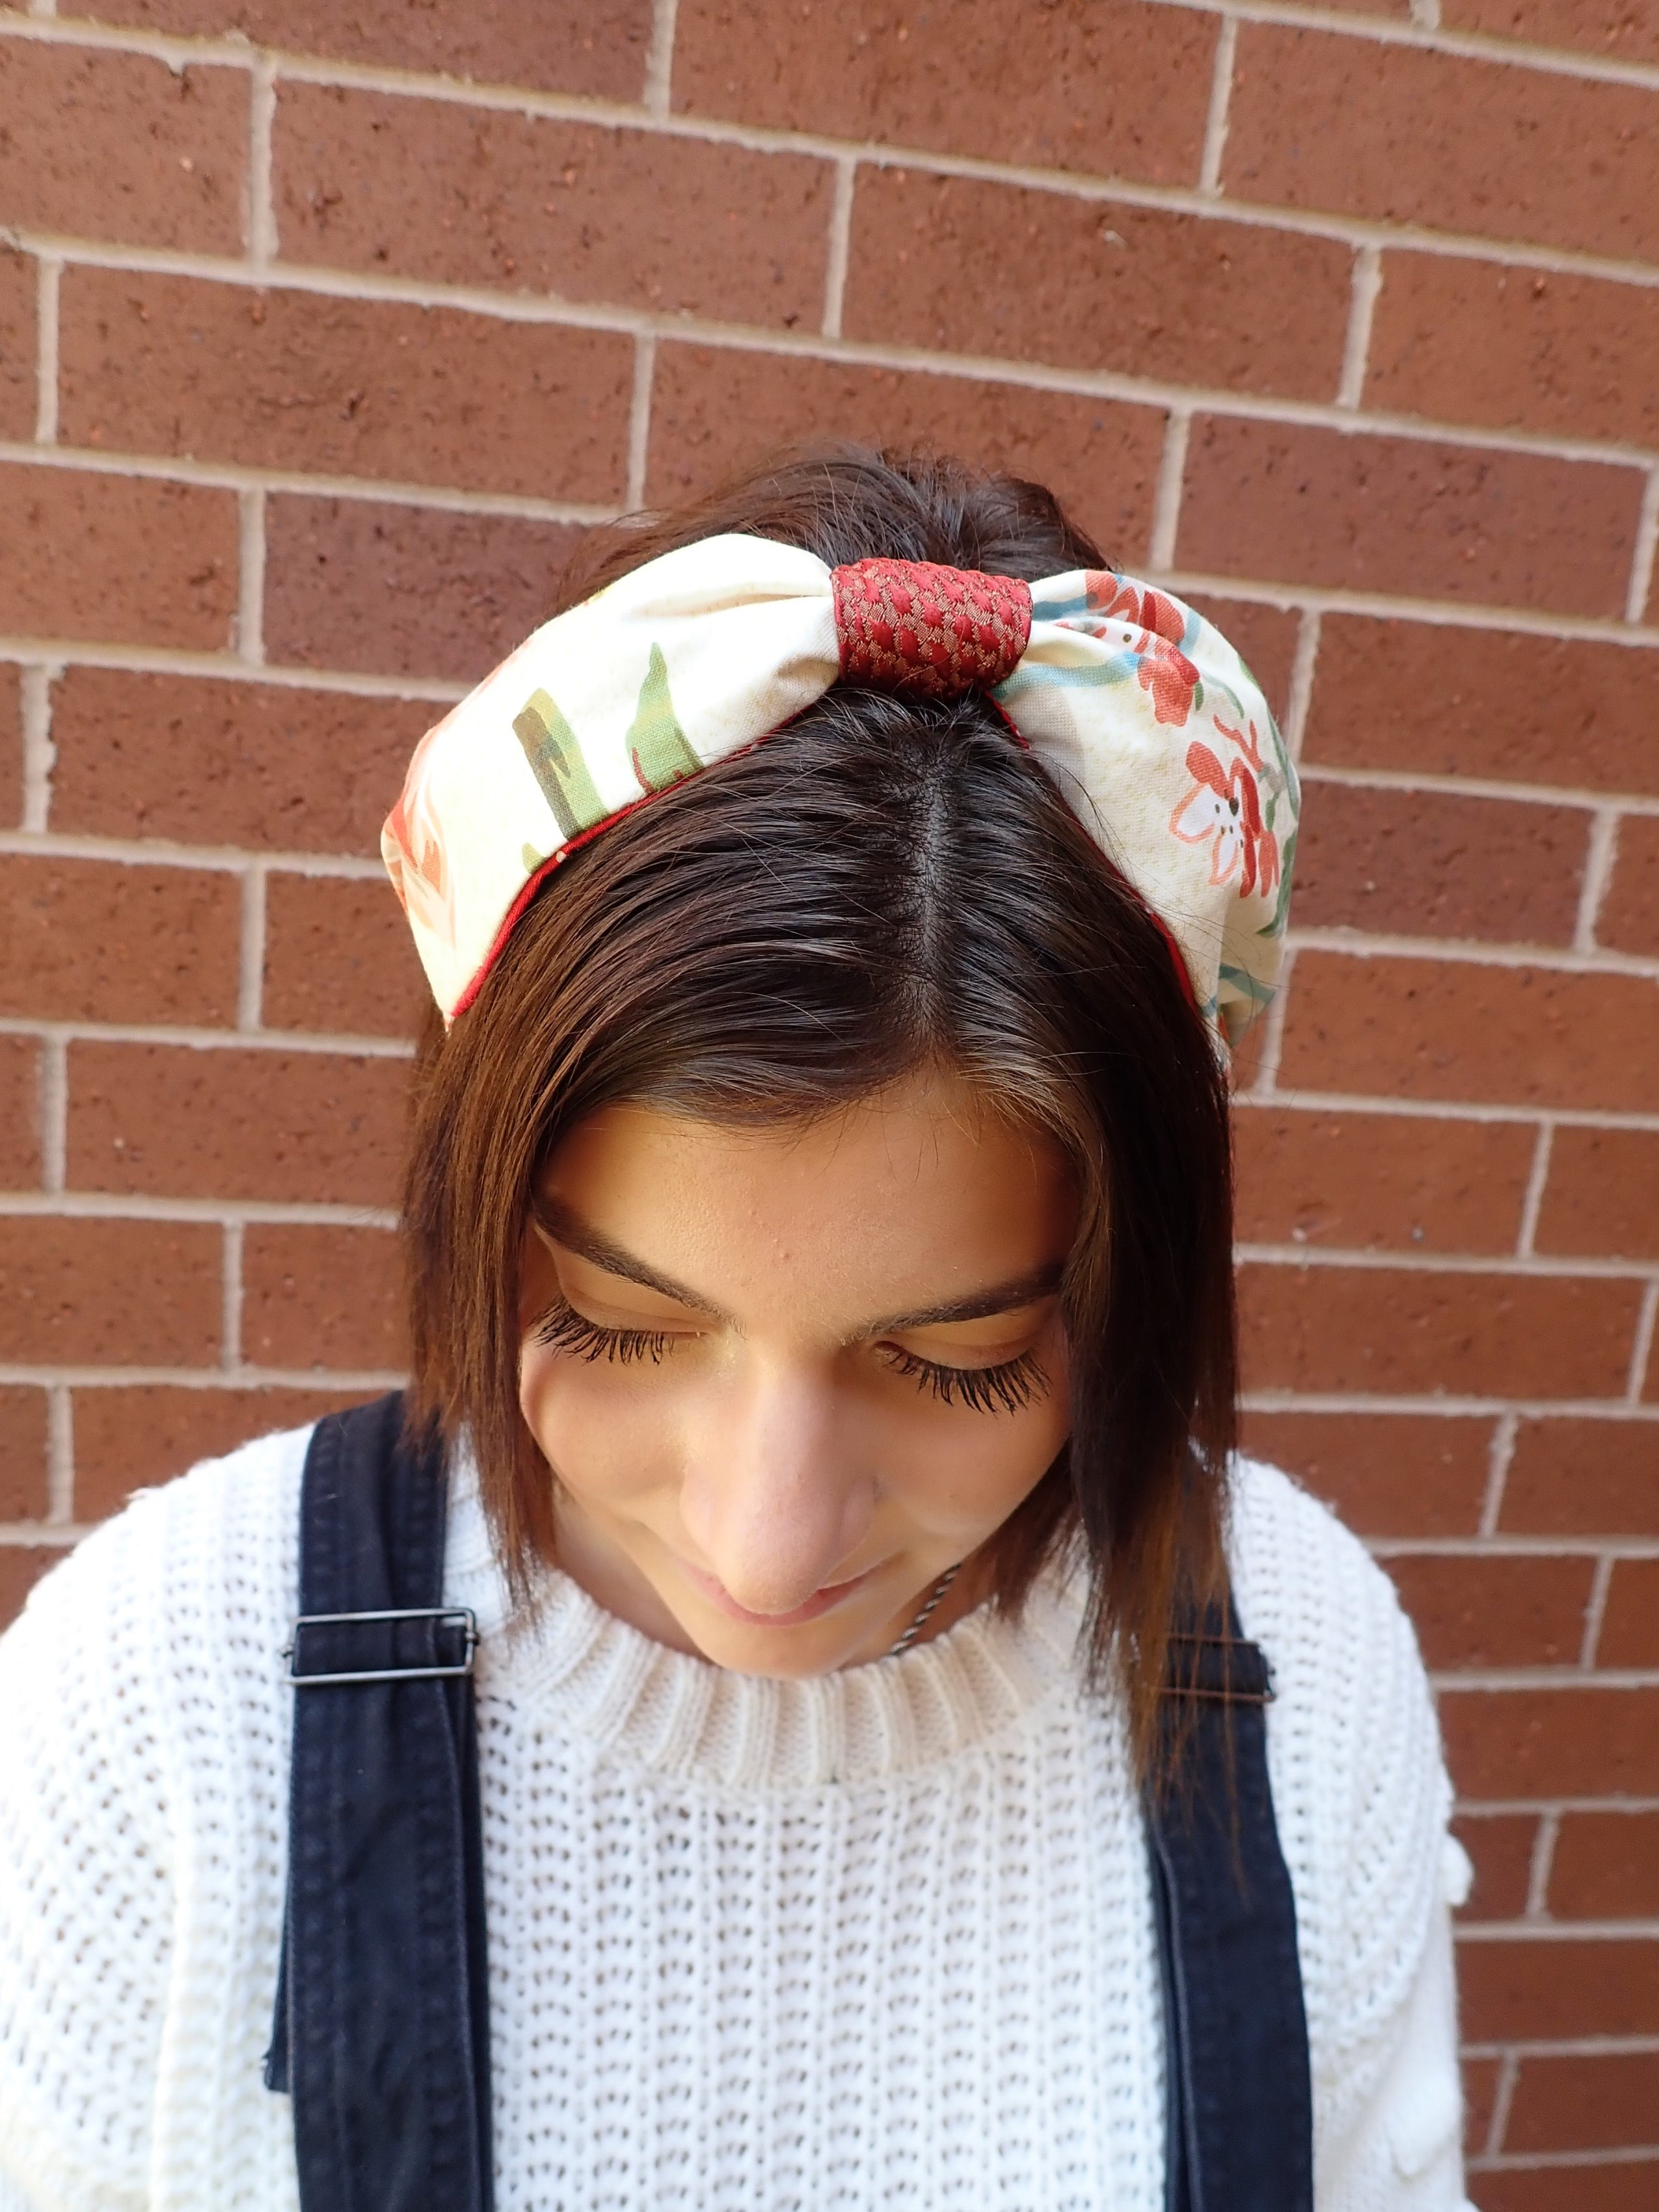 Ladies Green, Burnt Red and Tan Floral Turban Headband. Repurposed Fabric Headband Hat Accessory.